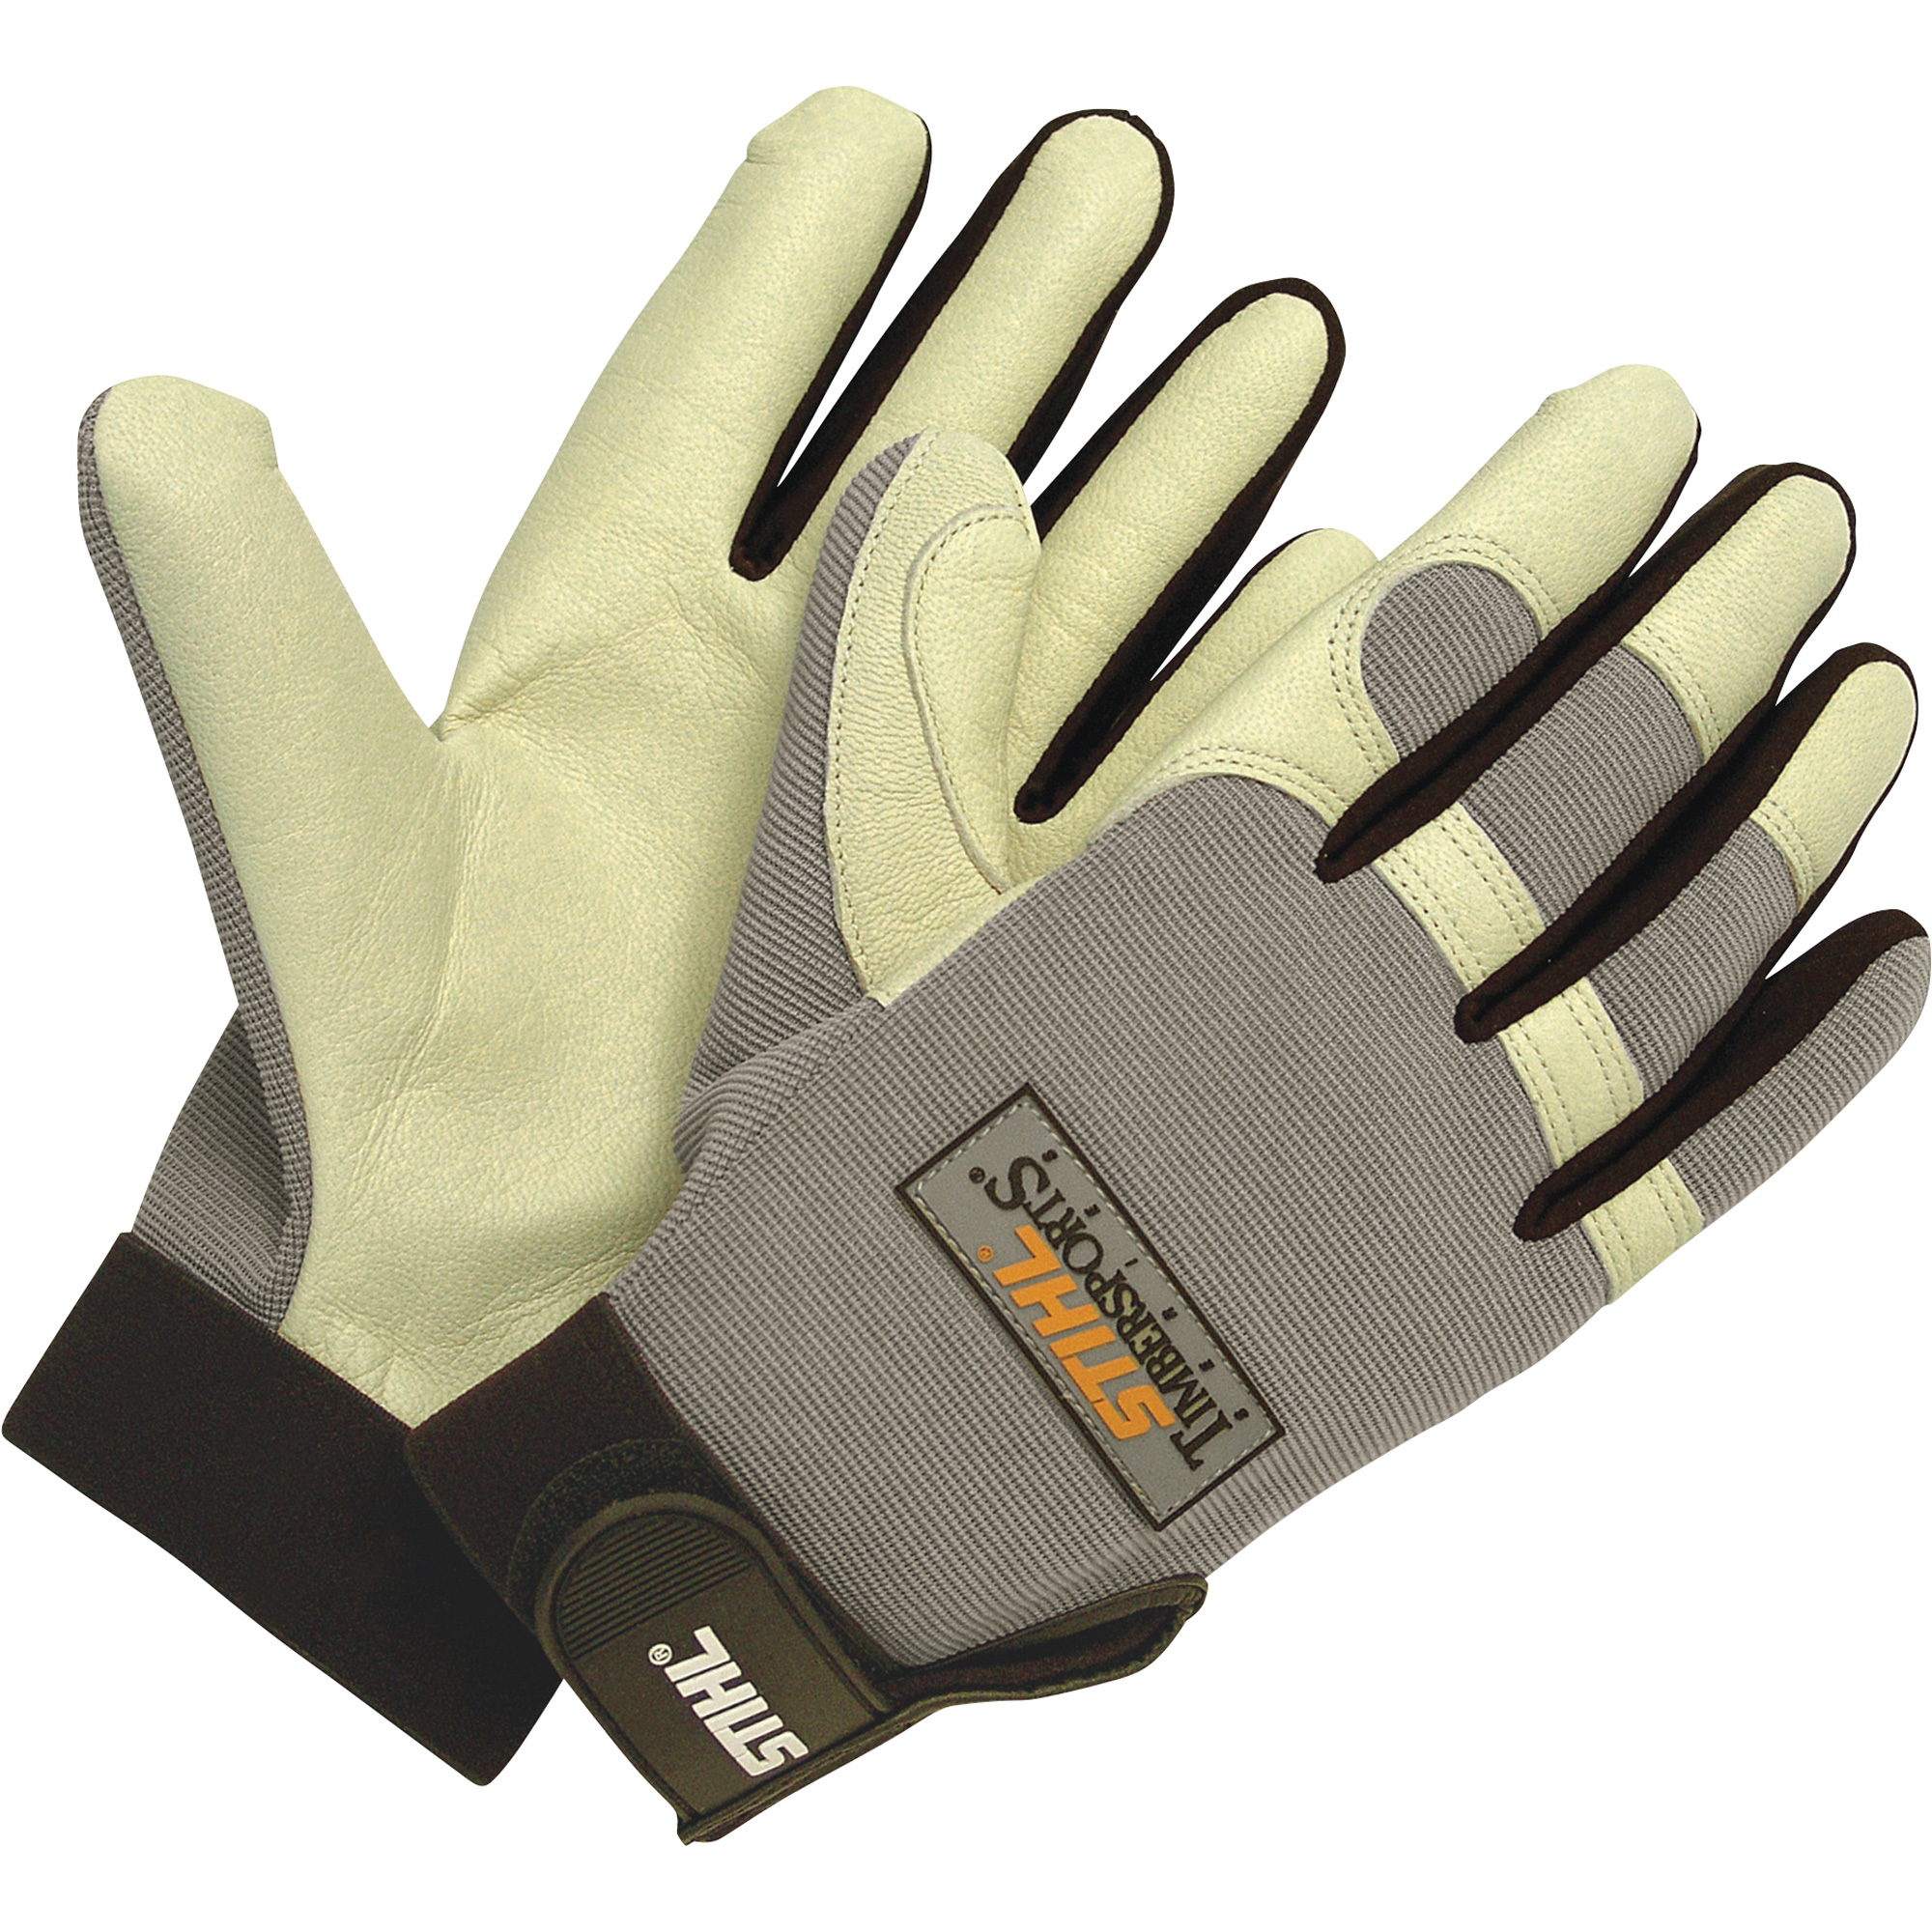 STIHL TimberSports Leather Gloves, Medium, Model 7010 884 1133